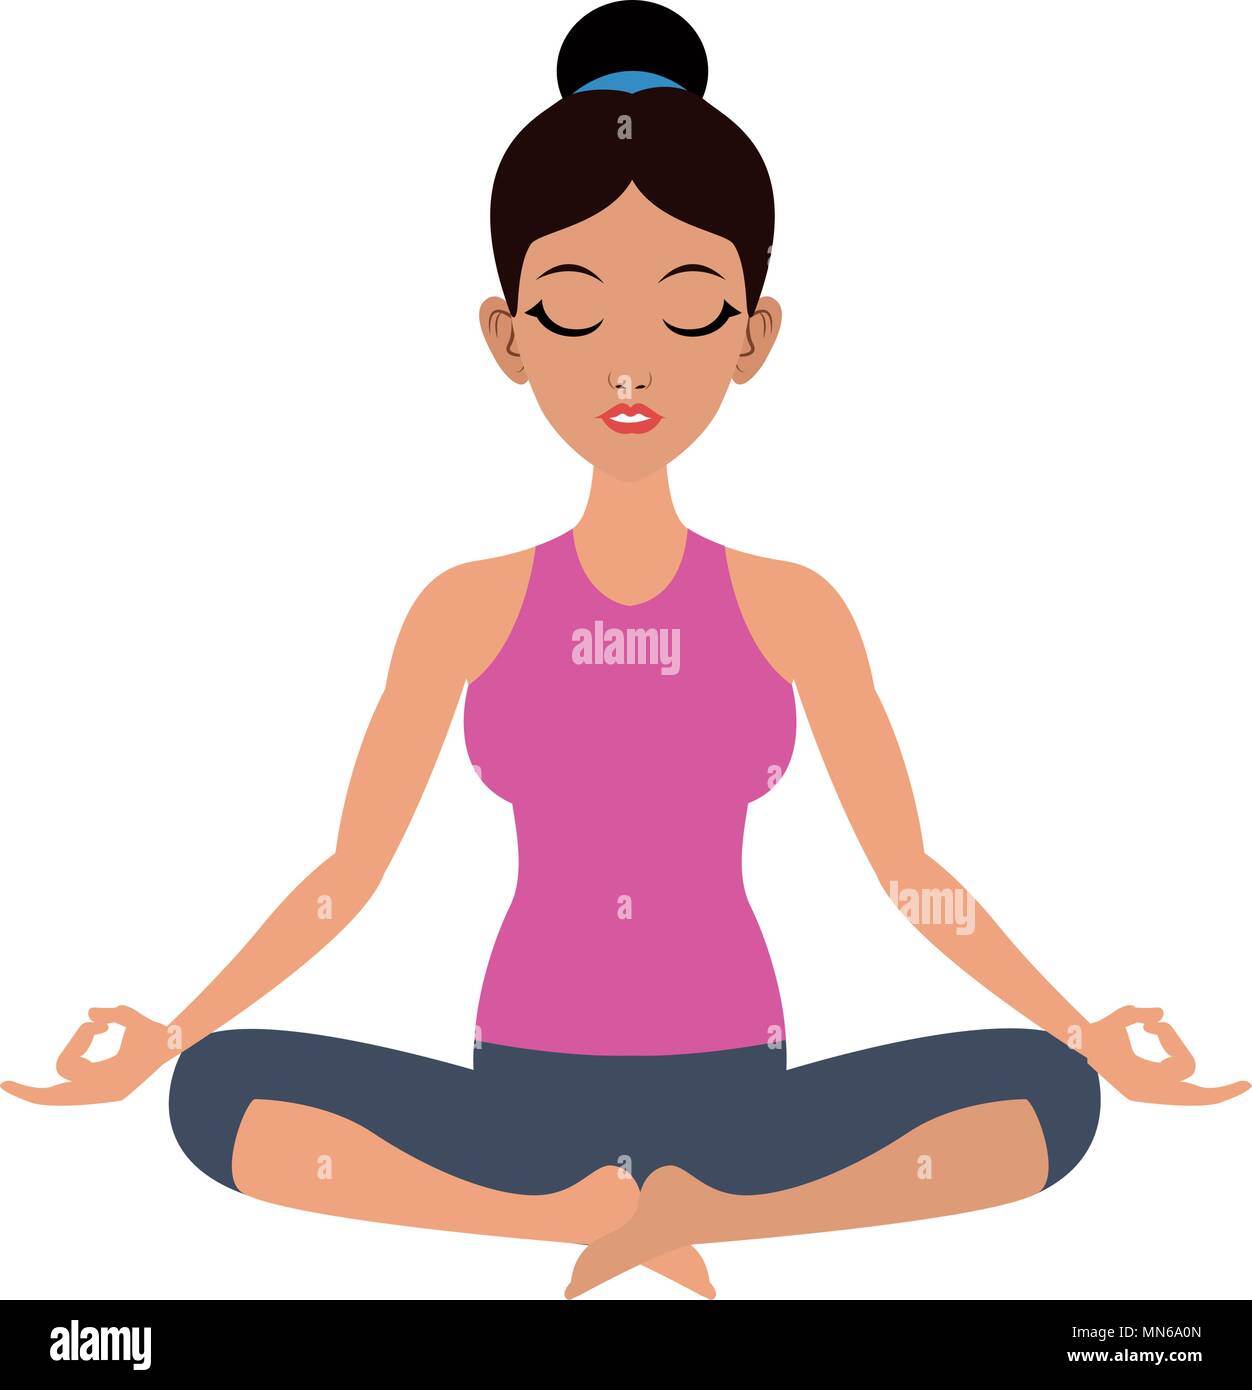 https://c8.alamy.com/compes/mn6a0n/mujer-haciendo-yoga-mn6a0n.jpg